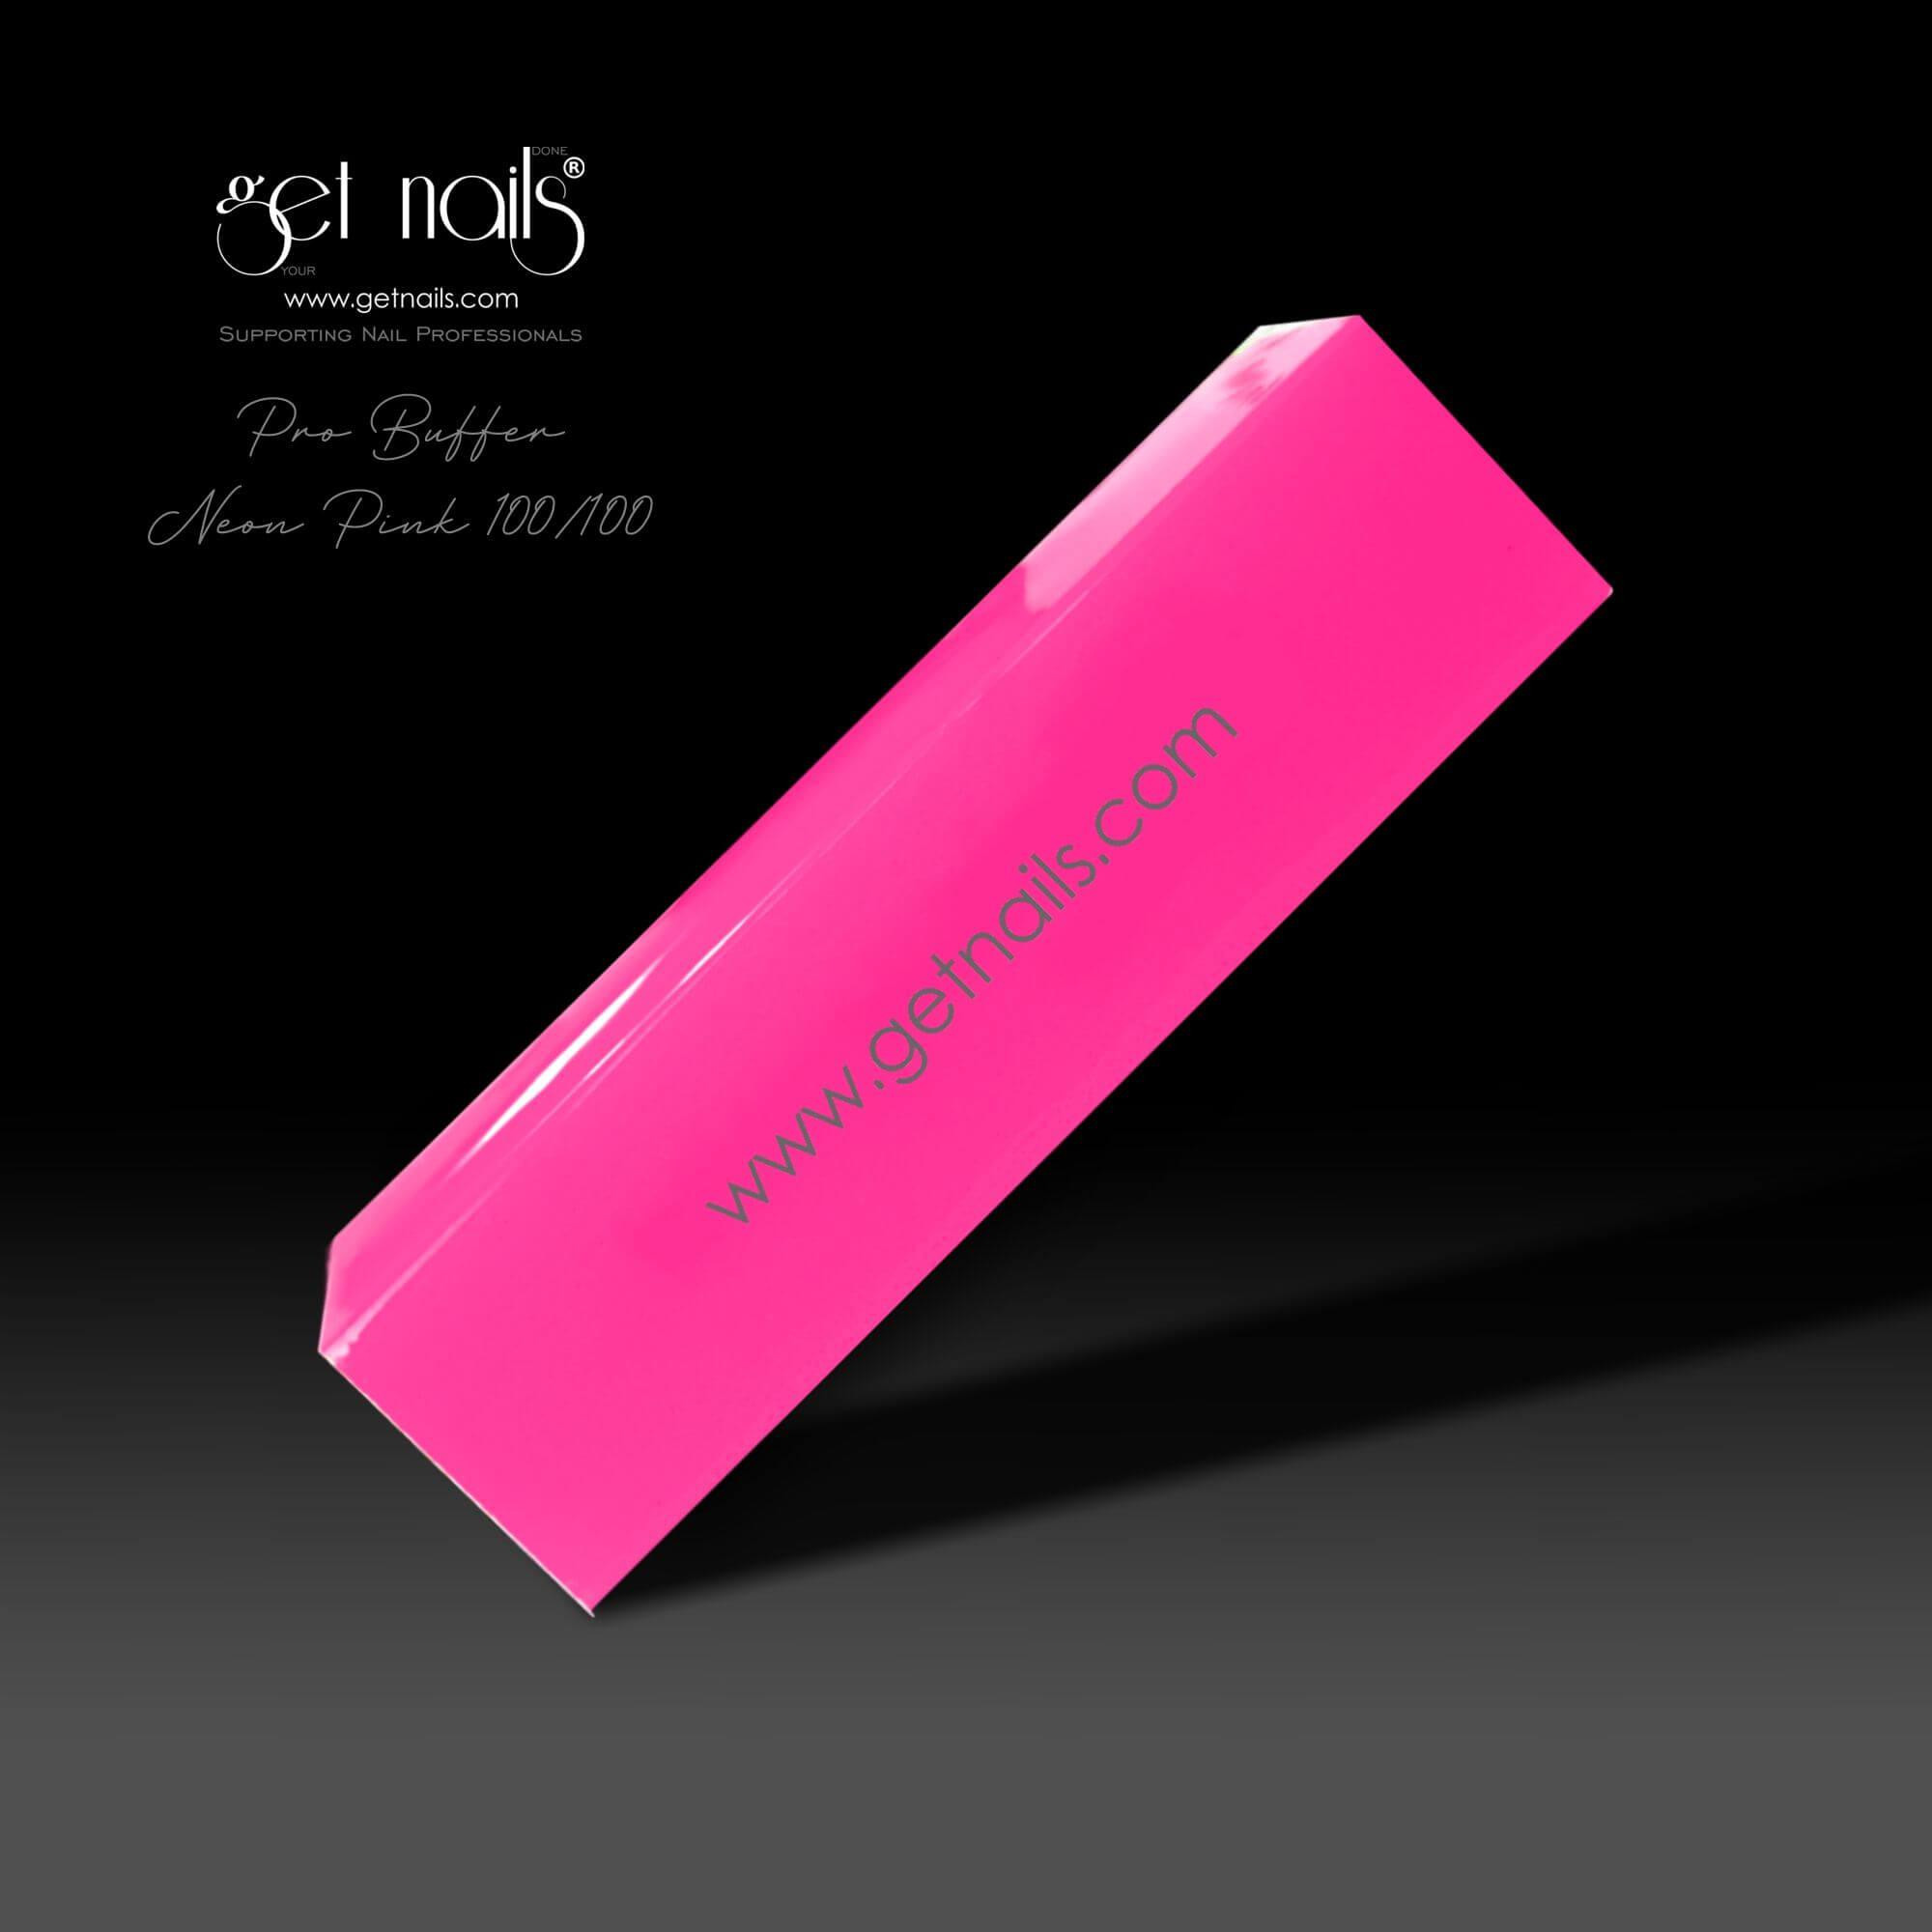 Get Nails Austria — Pro Buffer Neon Pink 100/100